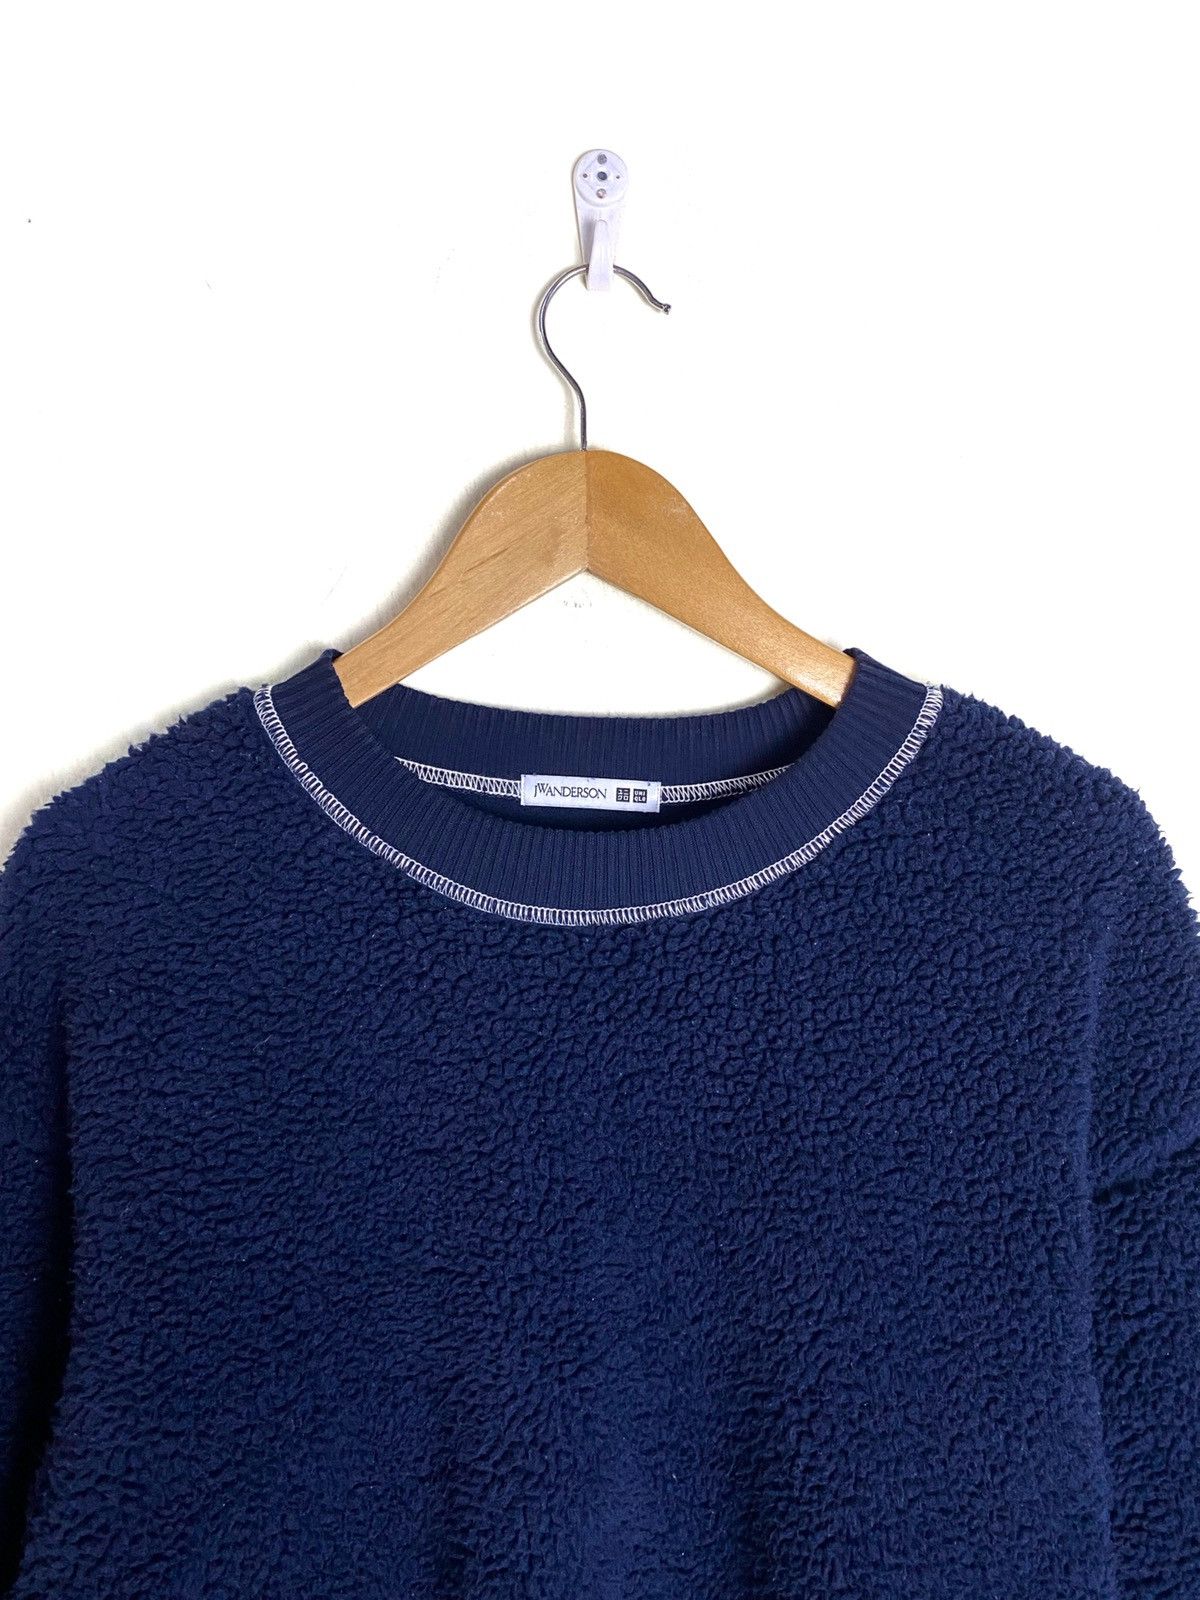 Uniqlo - J.W. Anderson Fleece Sweatshirt - 2